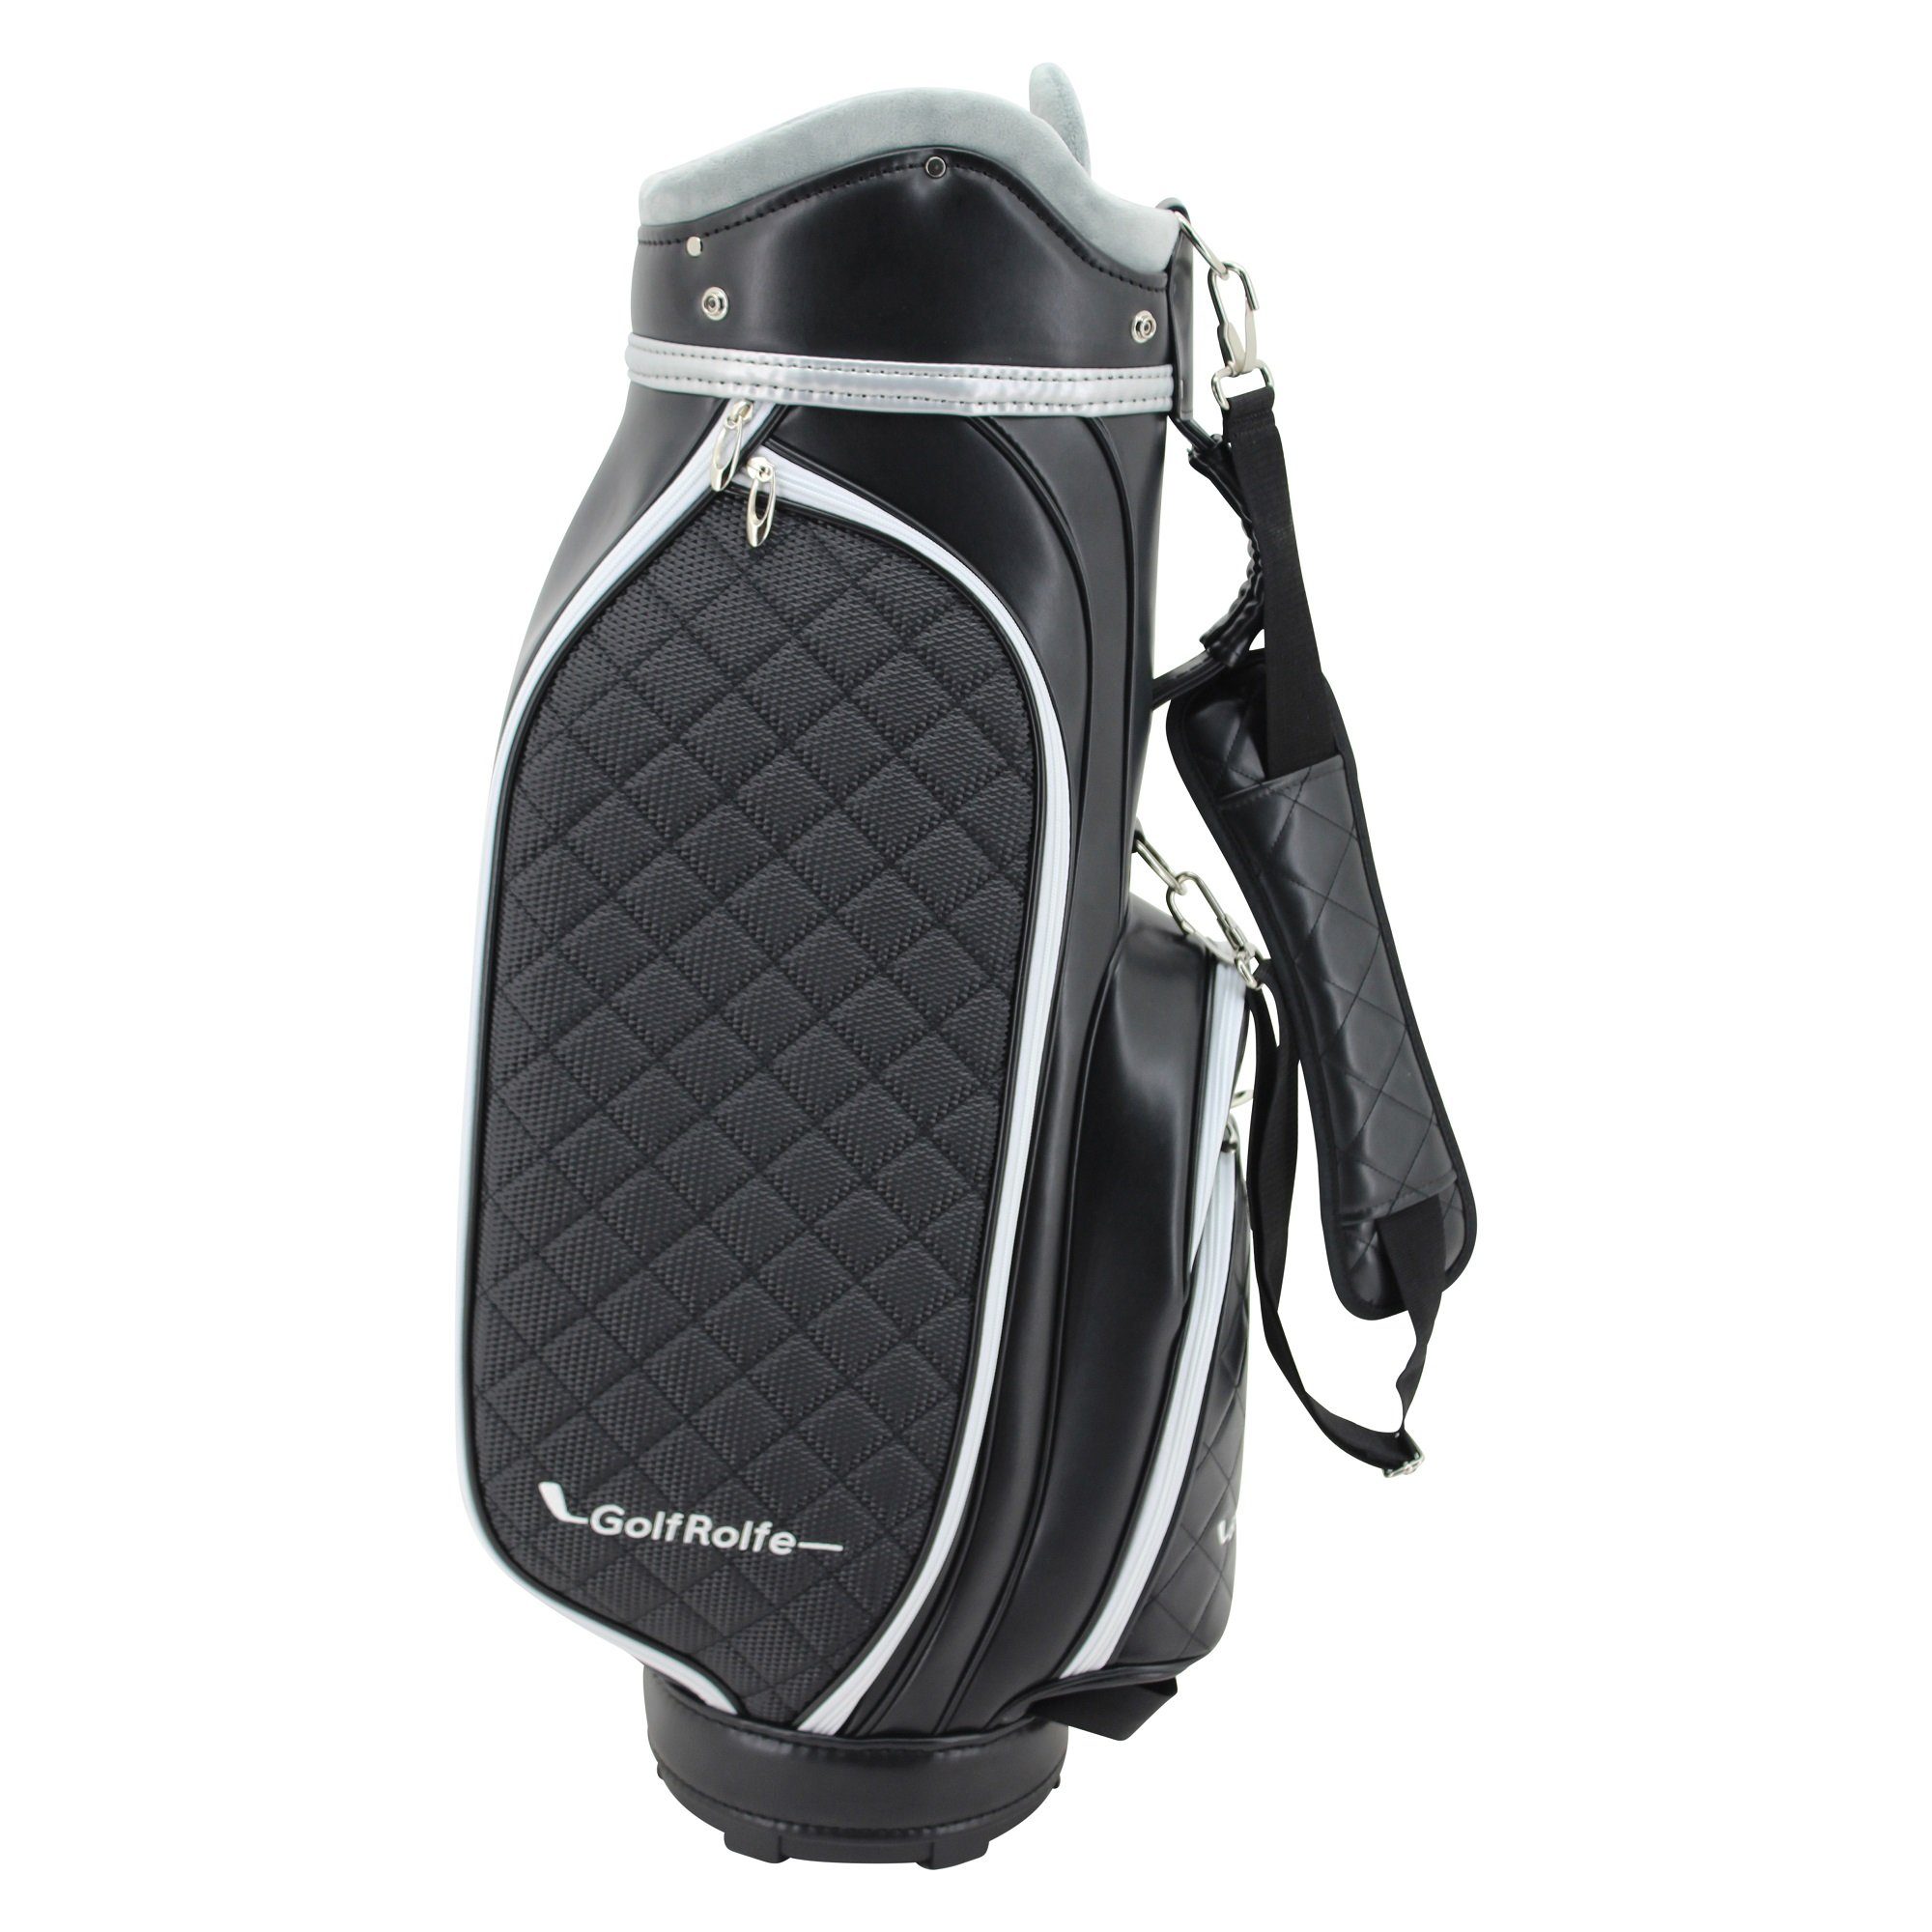 gerne bestellen GolfRolfe Golfballtasche Design 14286 Golftasche Caddybag GolfRolfe Golfbag - schwarz